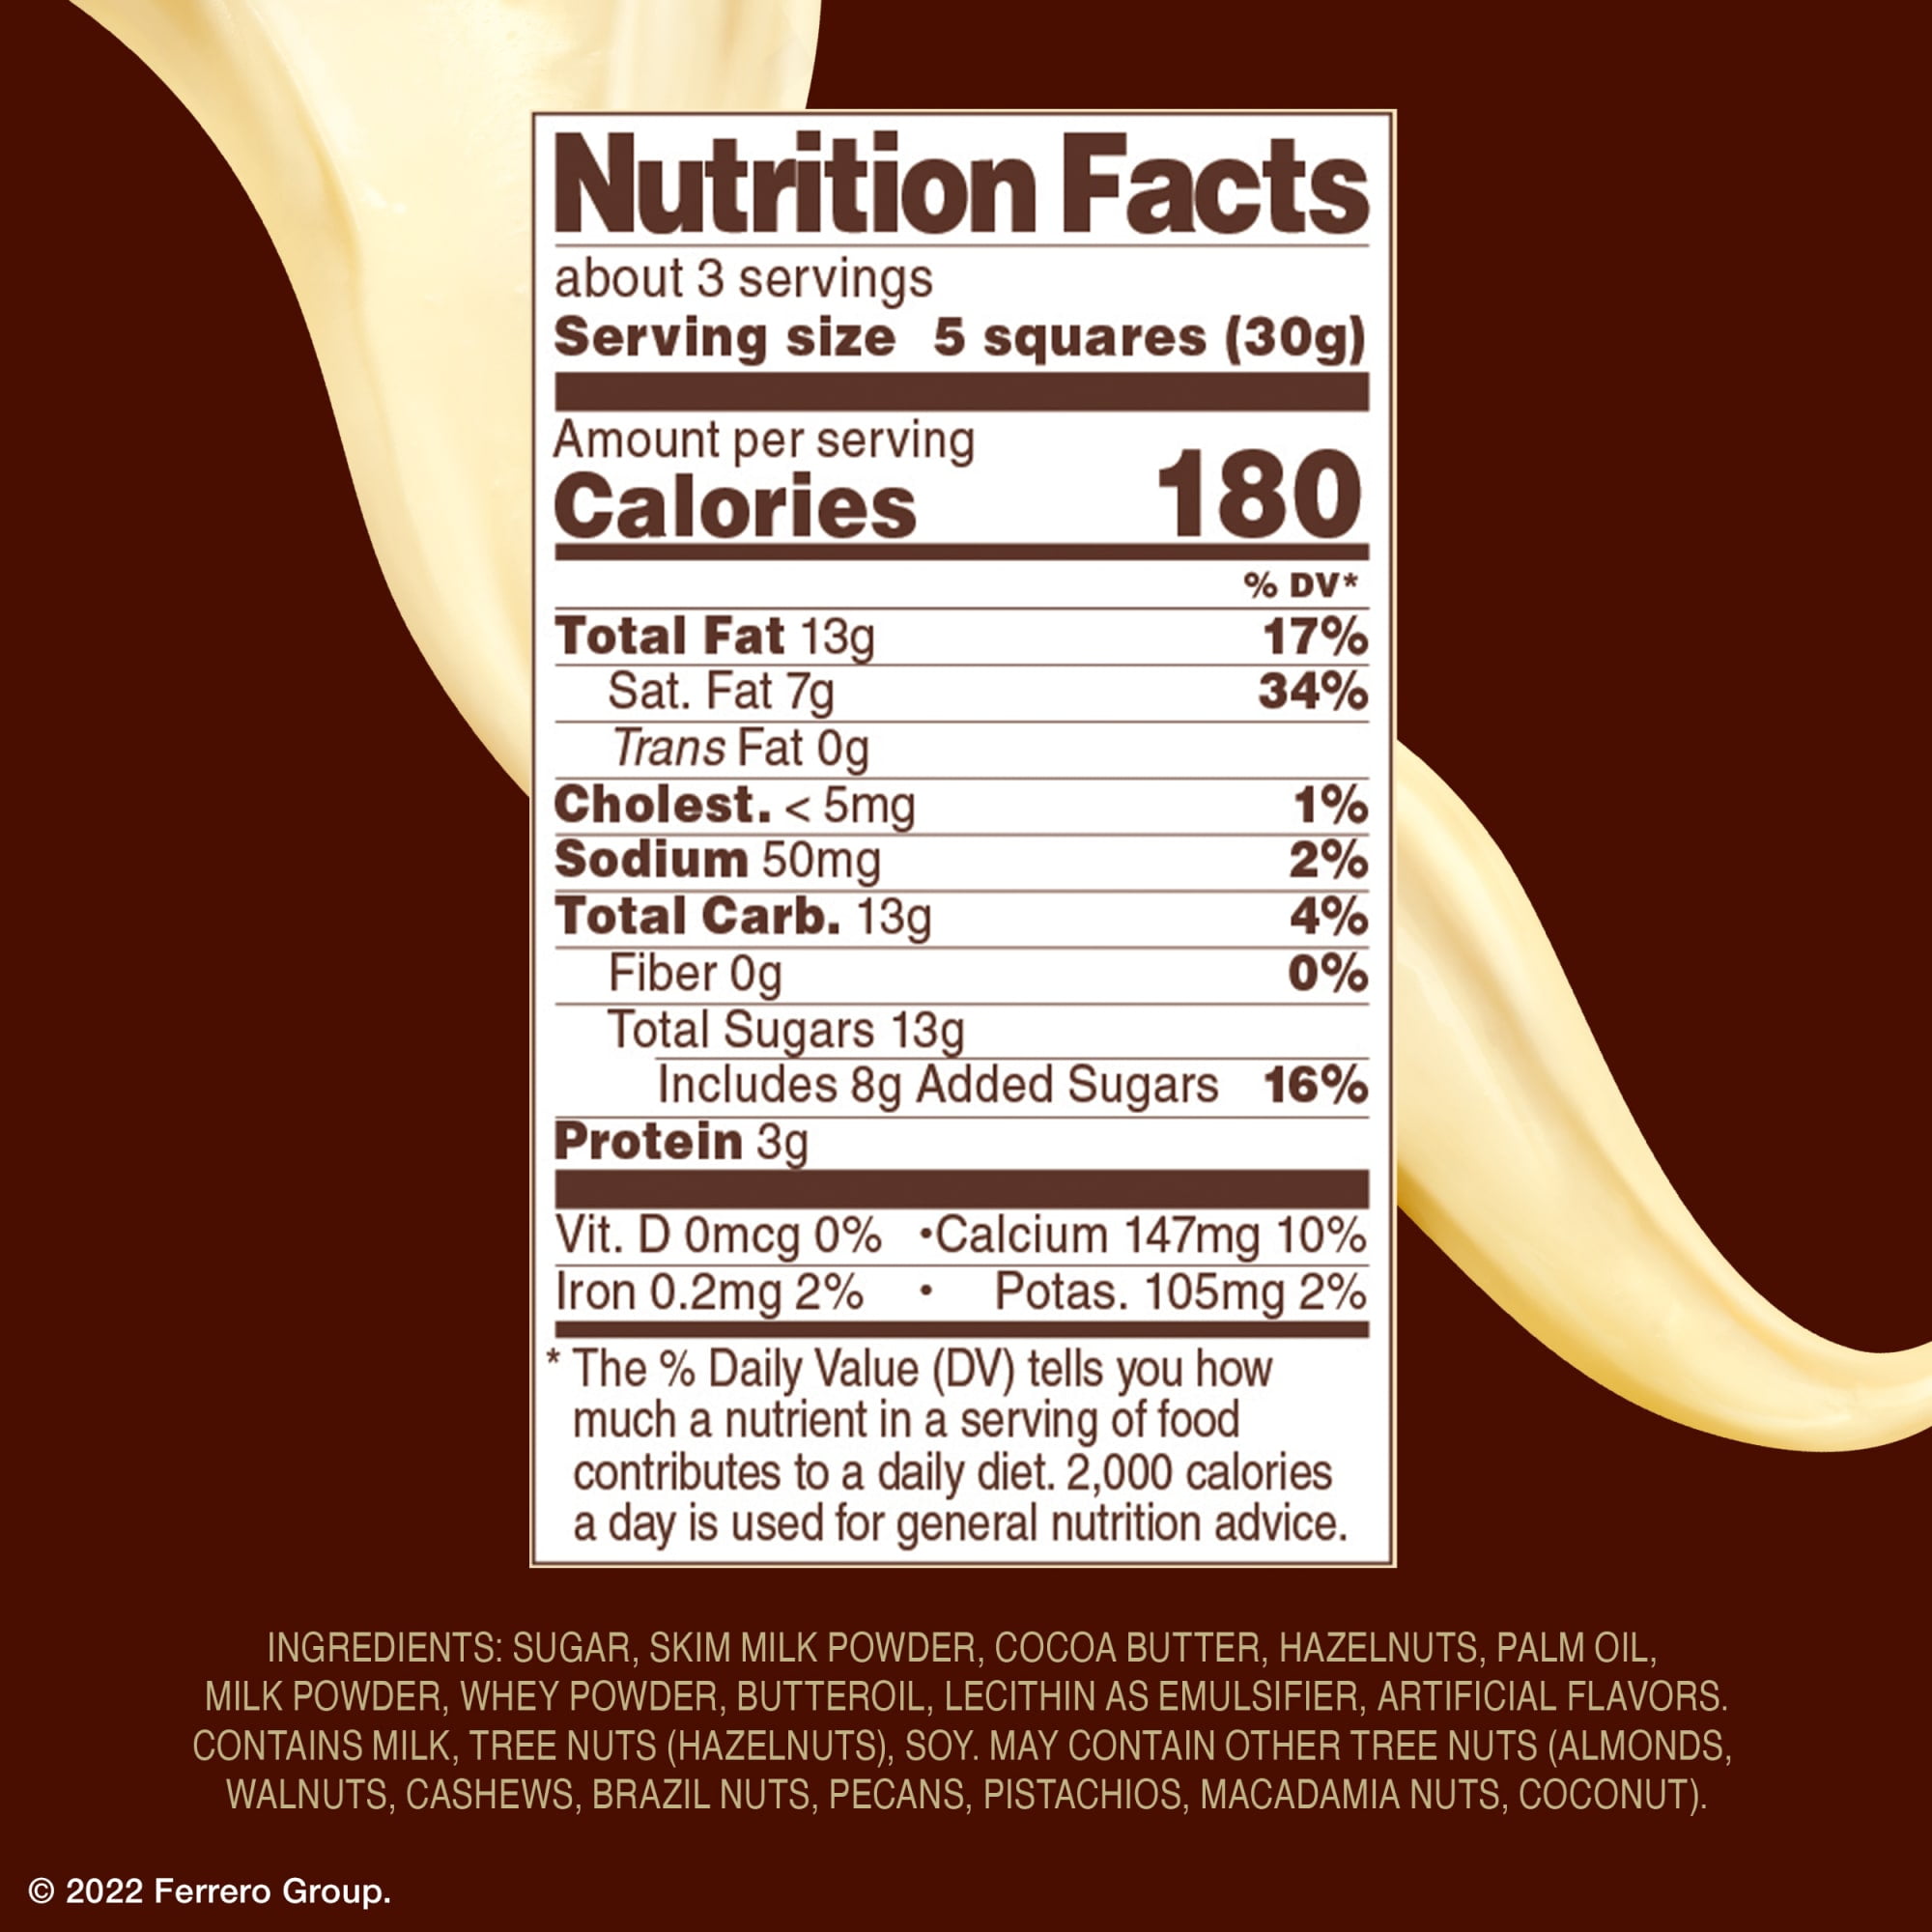 Ferrero Rocher Calories and Nutrition